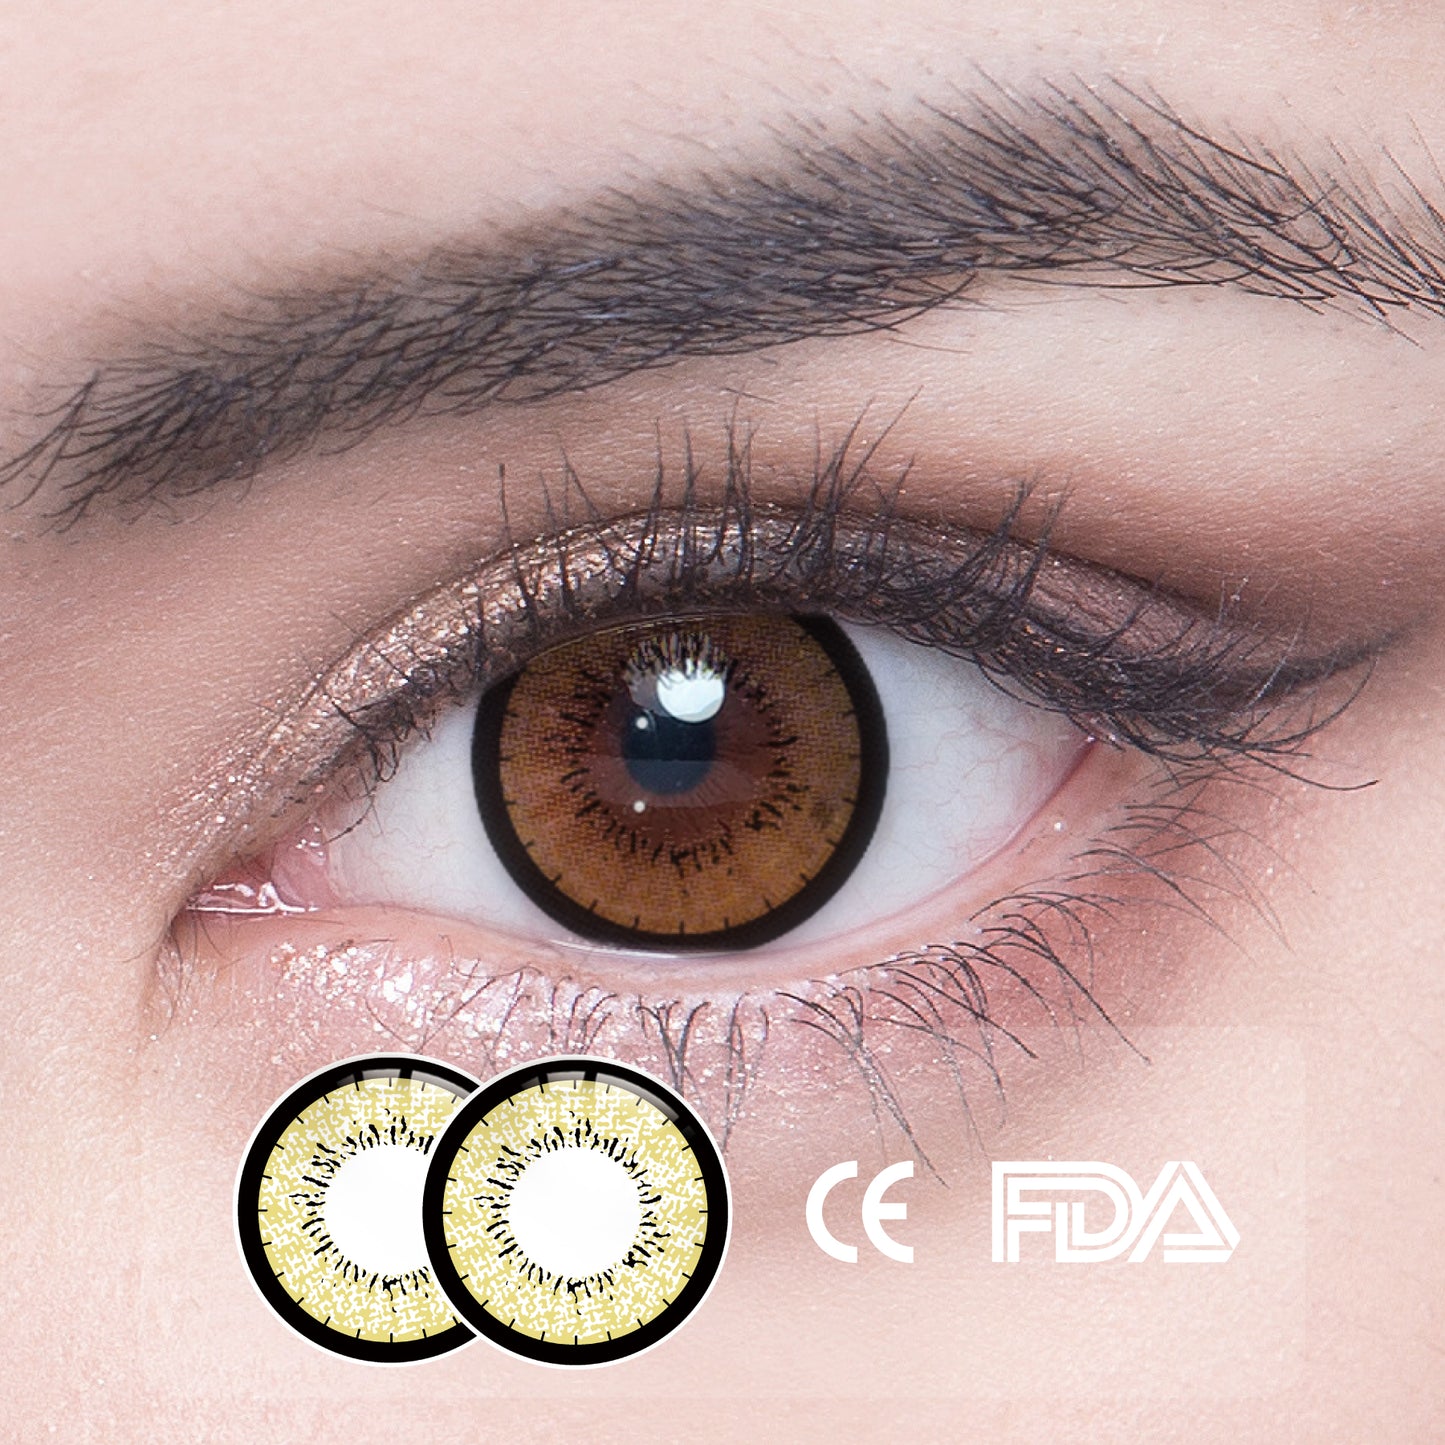 1Pcs FDA Certificate Eyes Colorful Contact Lenses - Lolita black